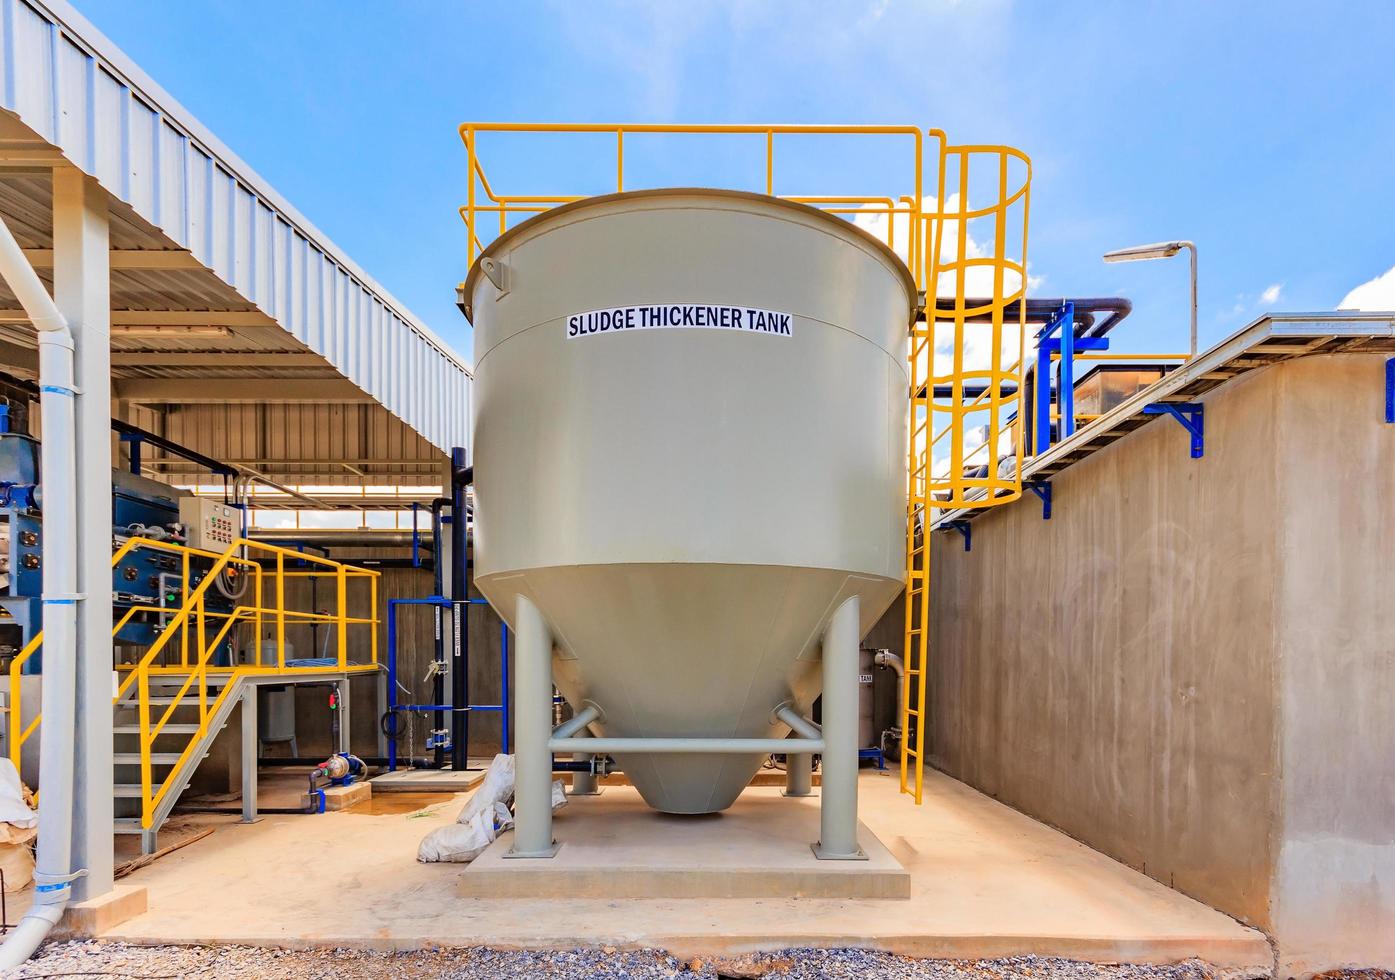 Sludge thickener tank in Water Treatment plant photo